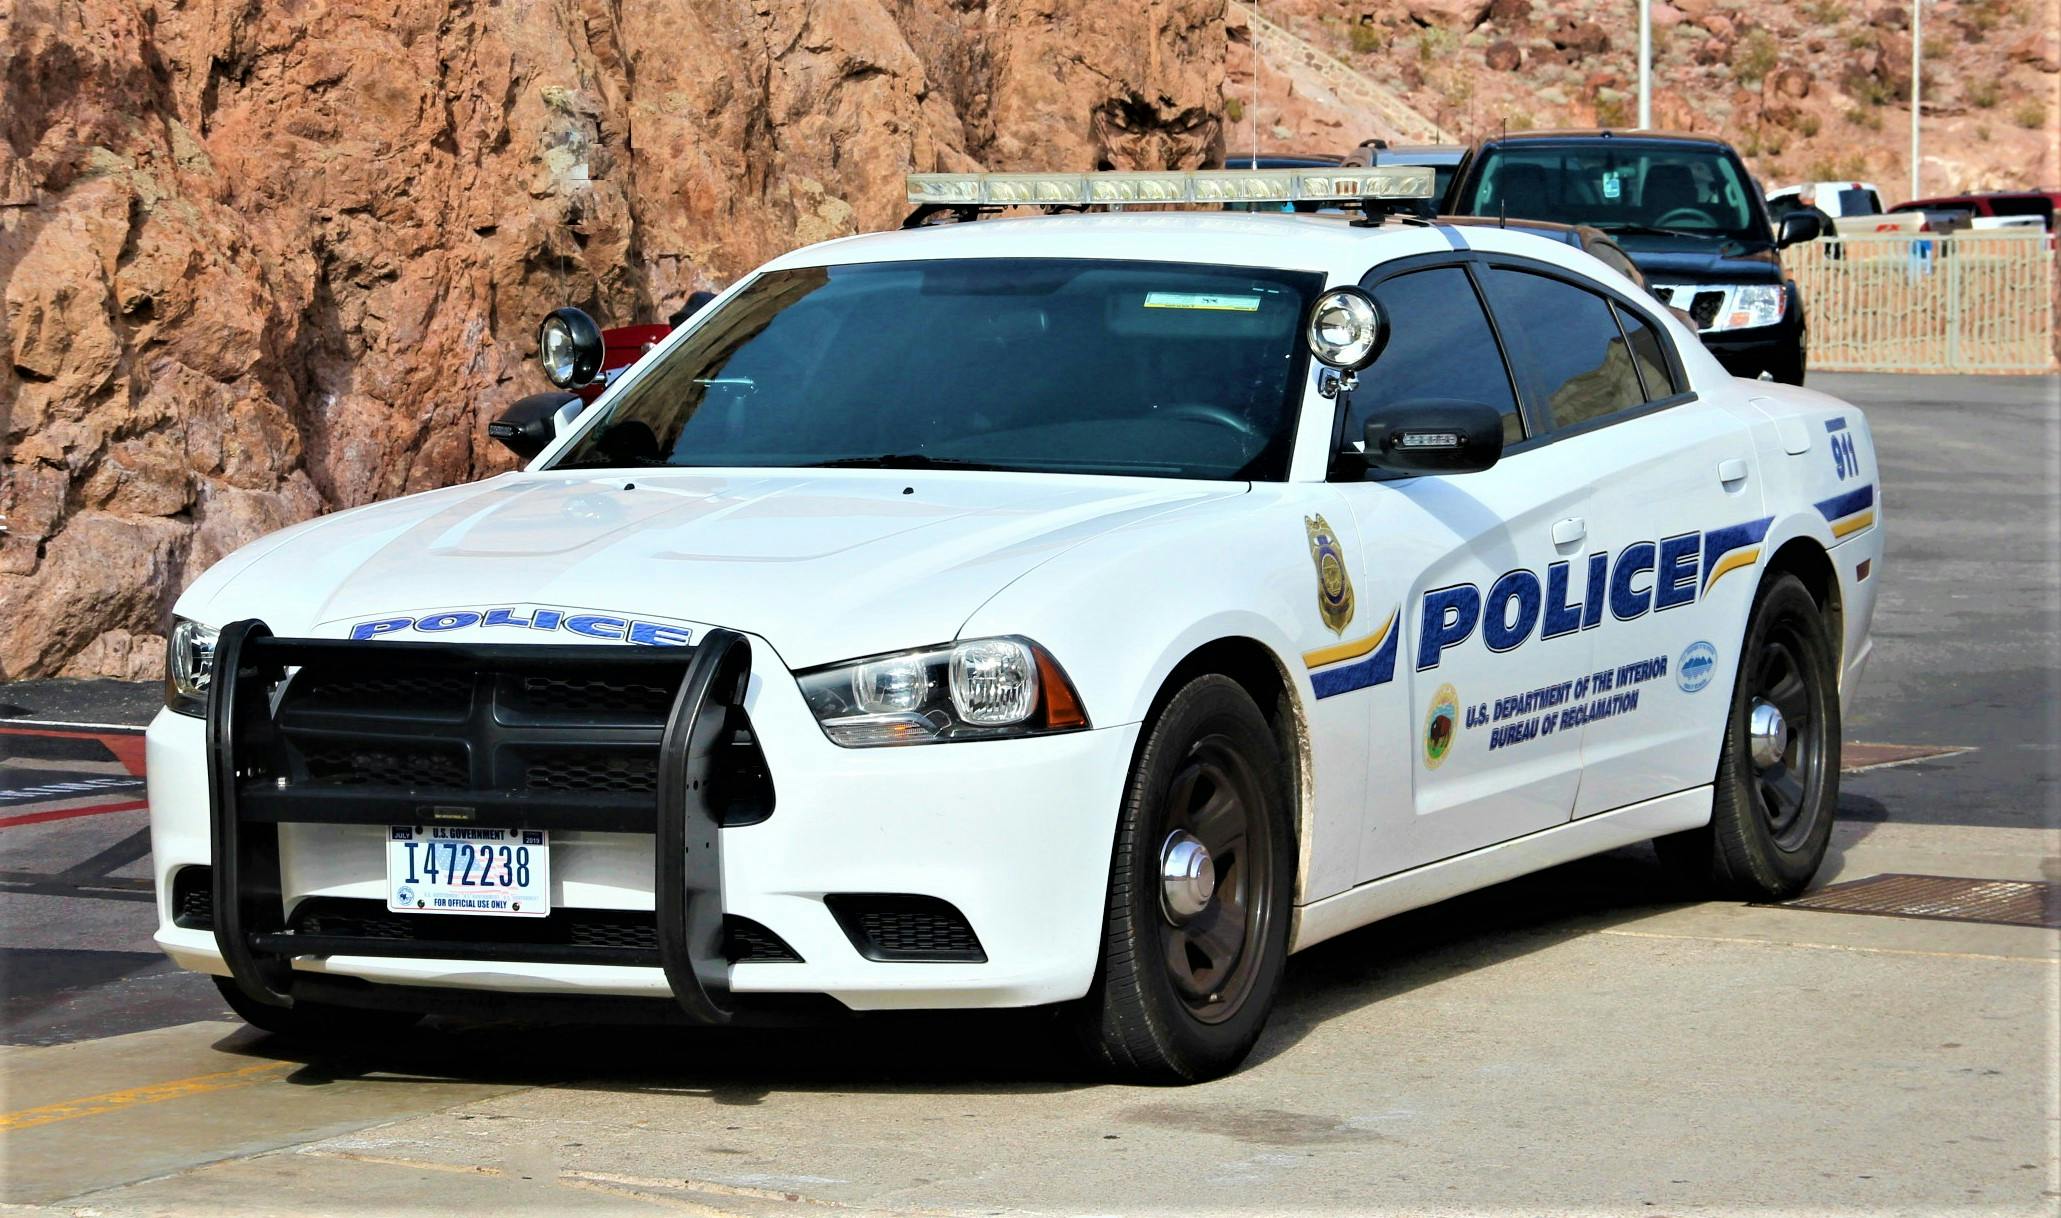 Kostenloses Foto Zum Thema Auto Polizei Usa